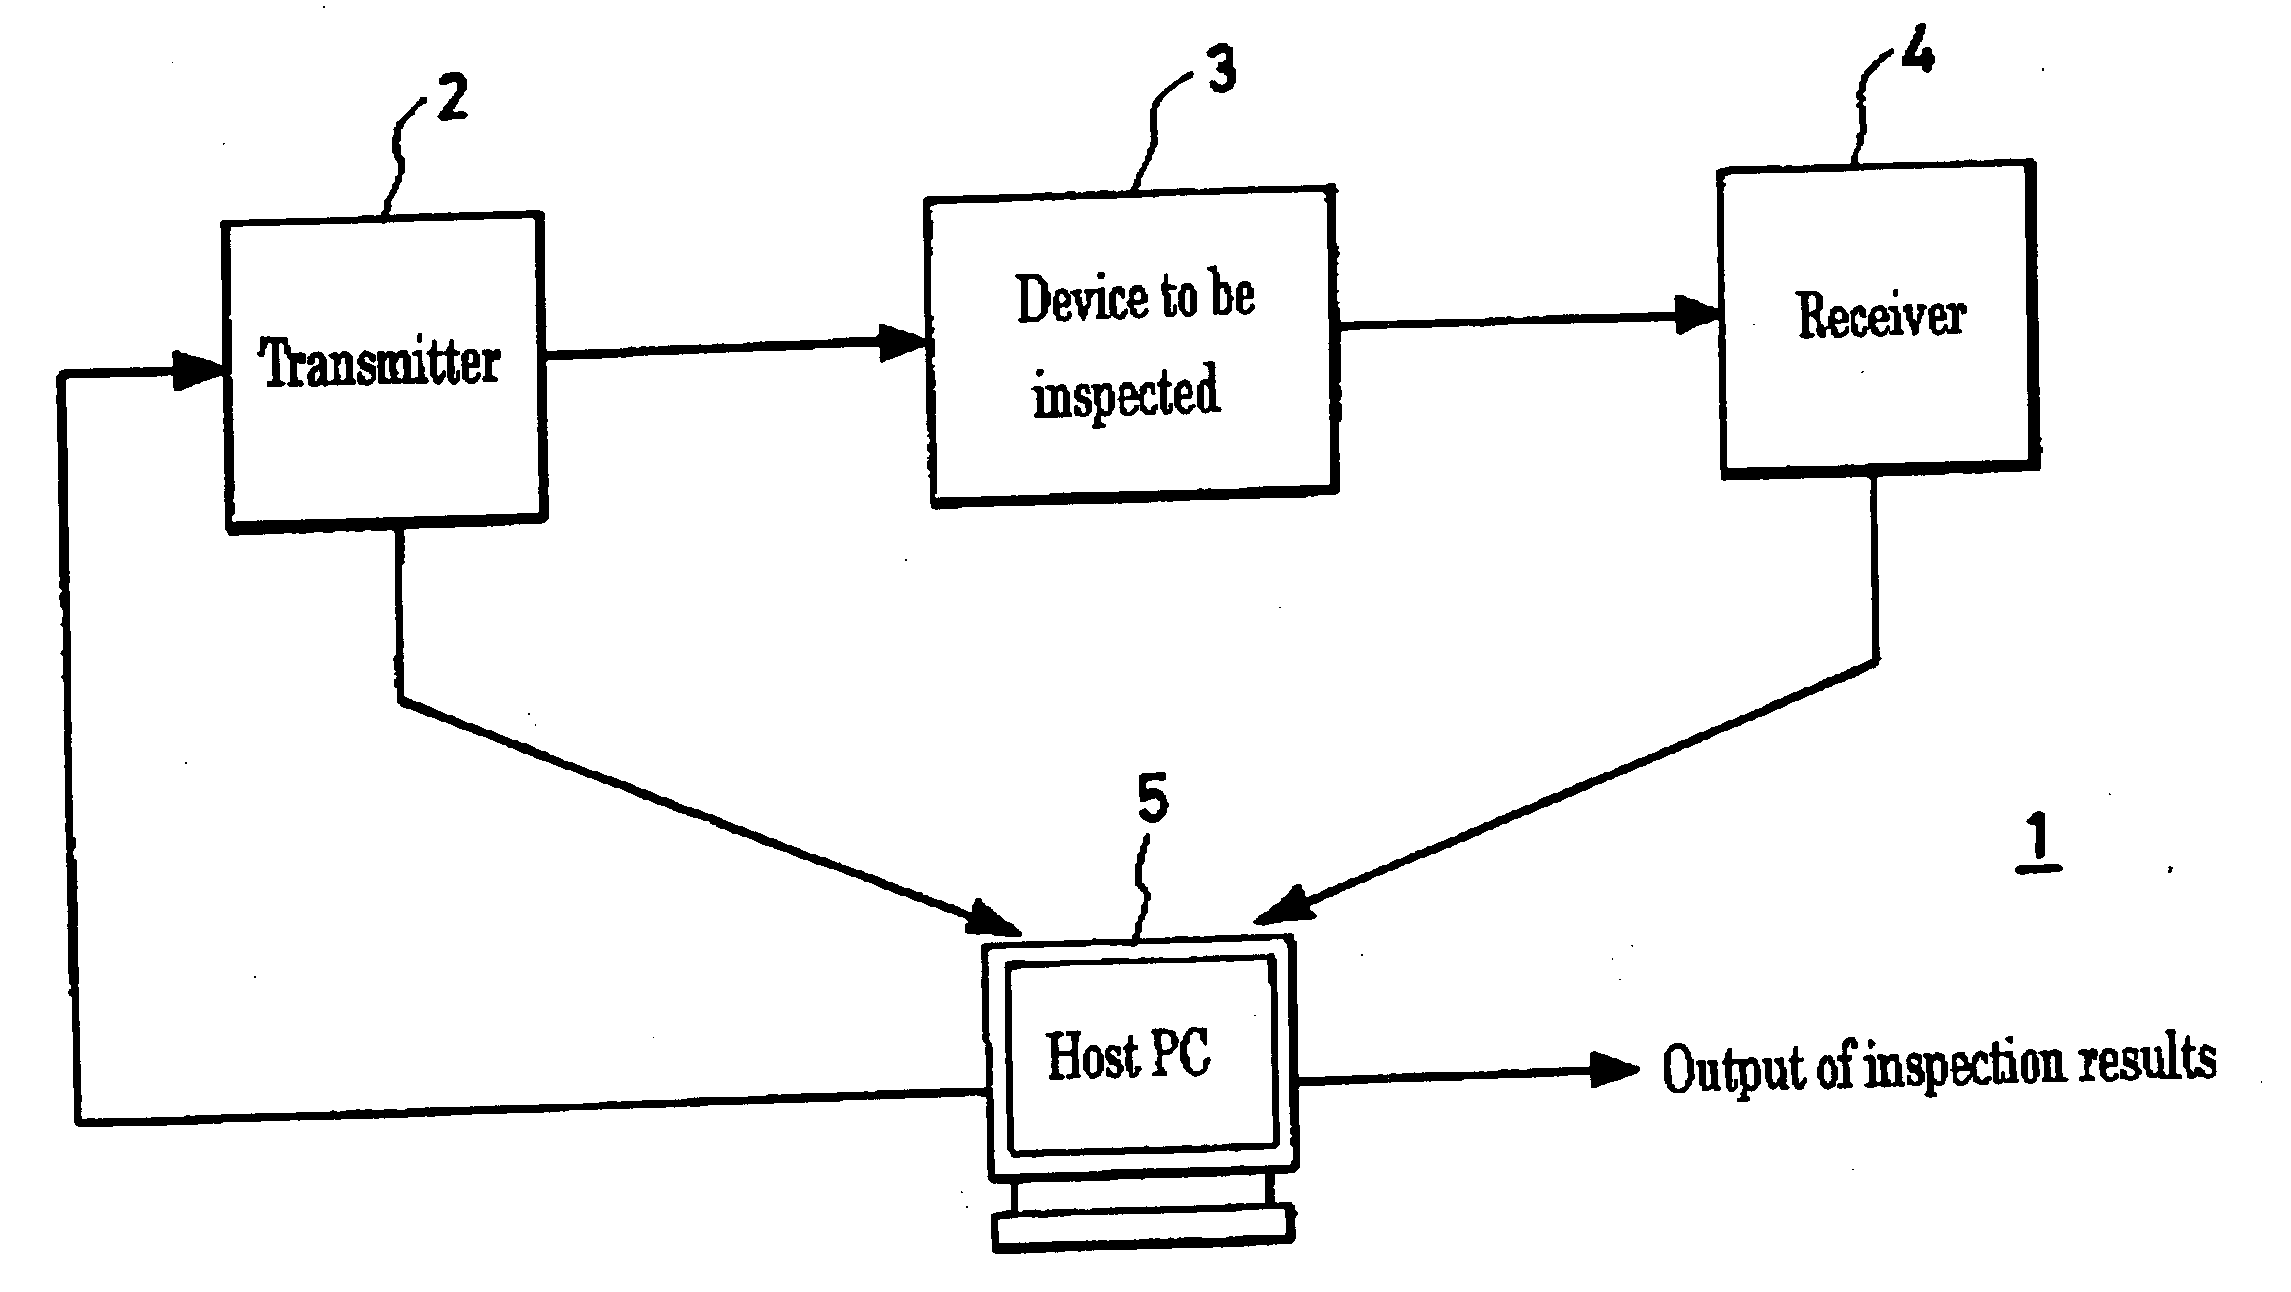 Network device testing equipment